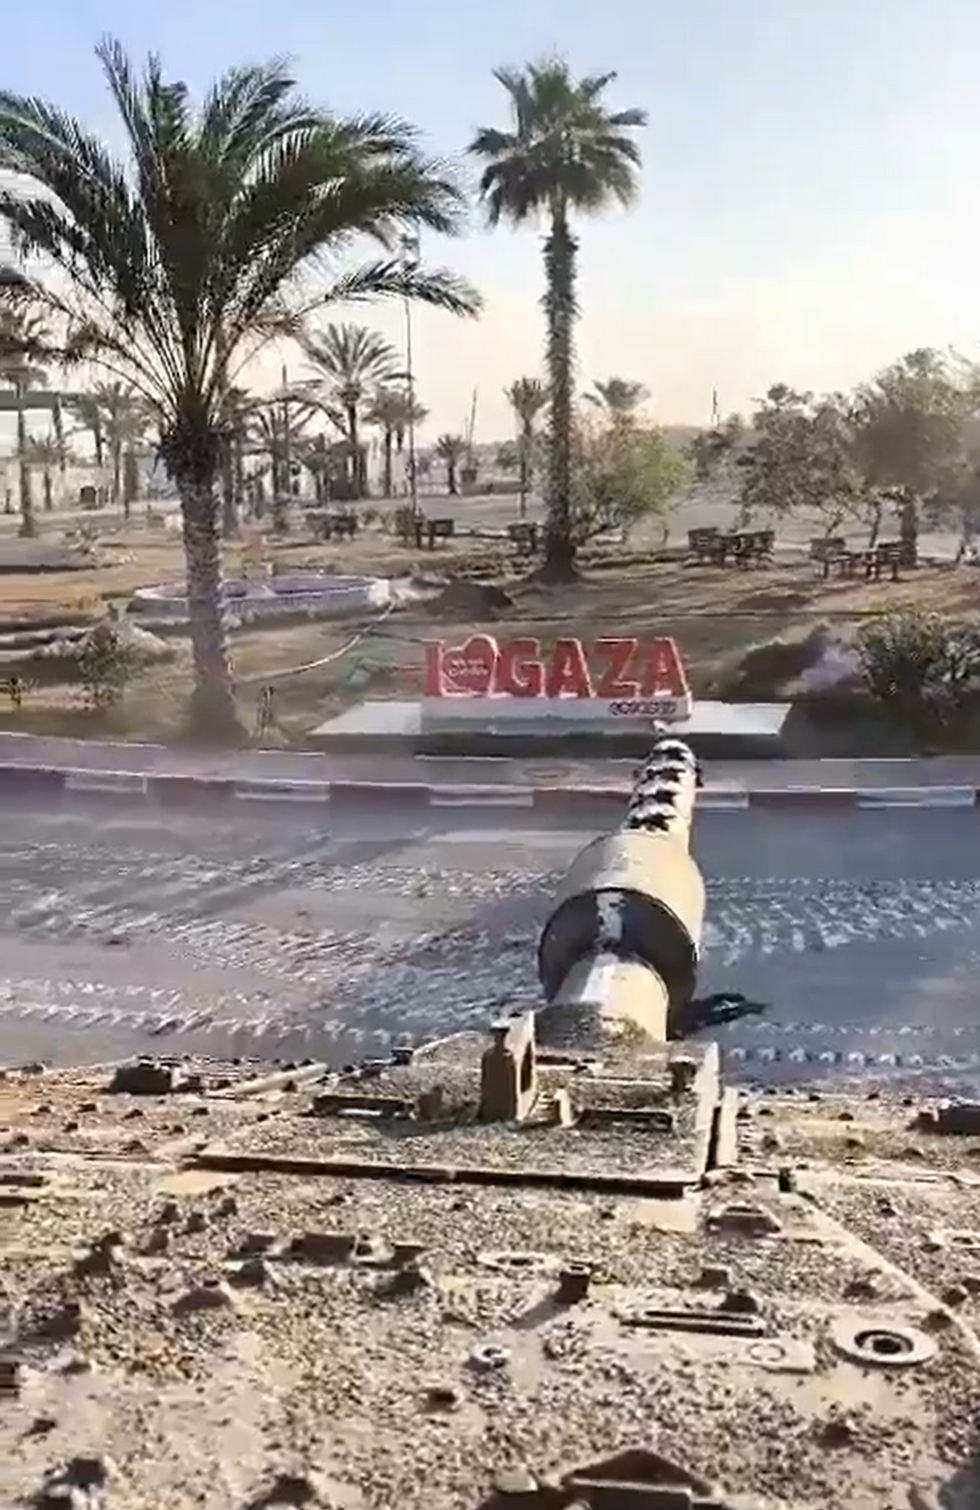 An Israeli tank brigade has crushed an \u201cI love Gaza\u201d sign as troops took control of the Rafah crossing